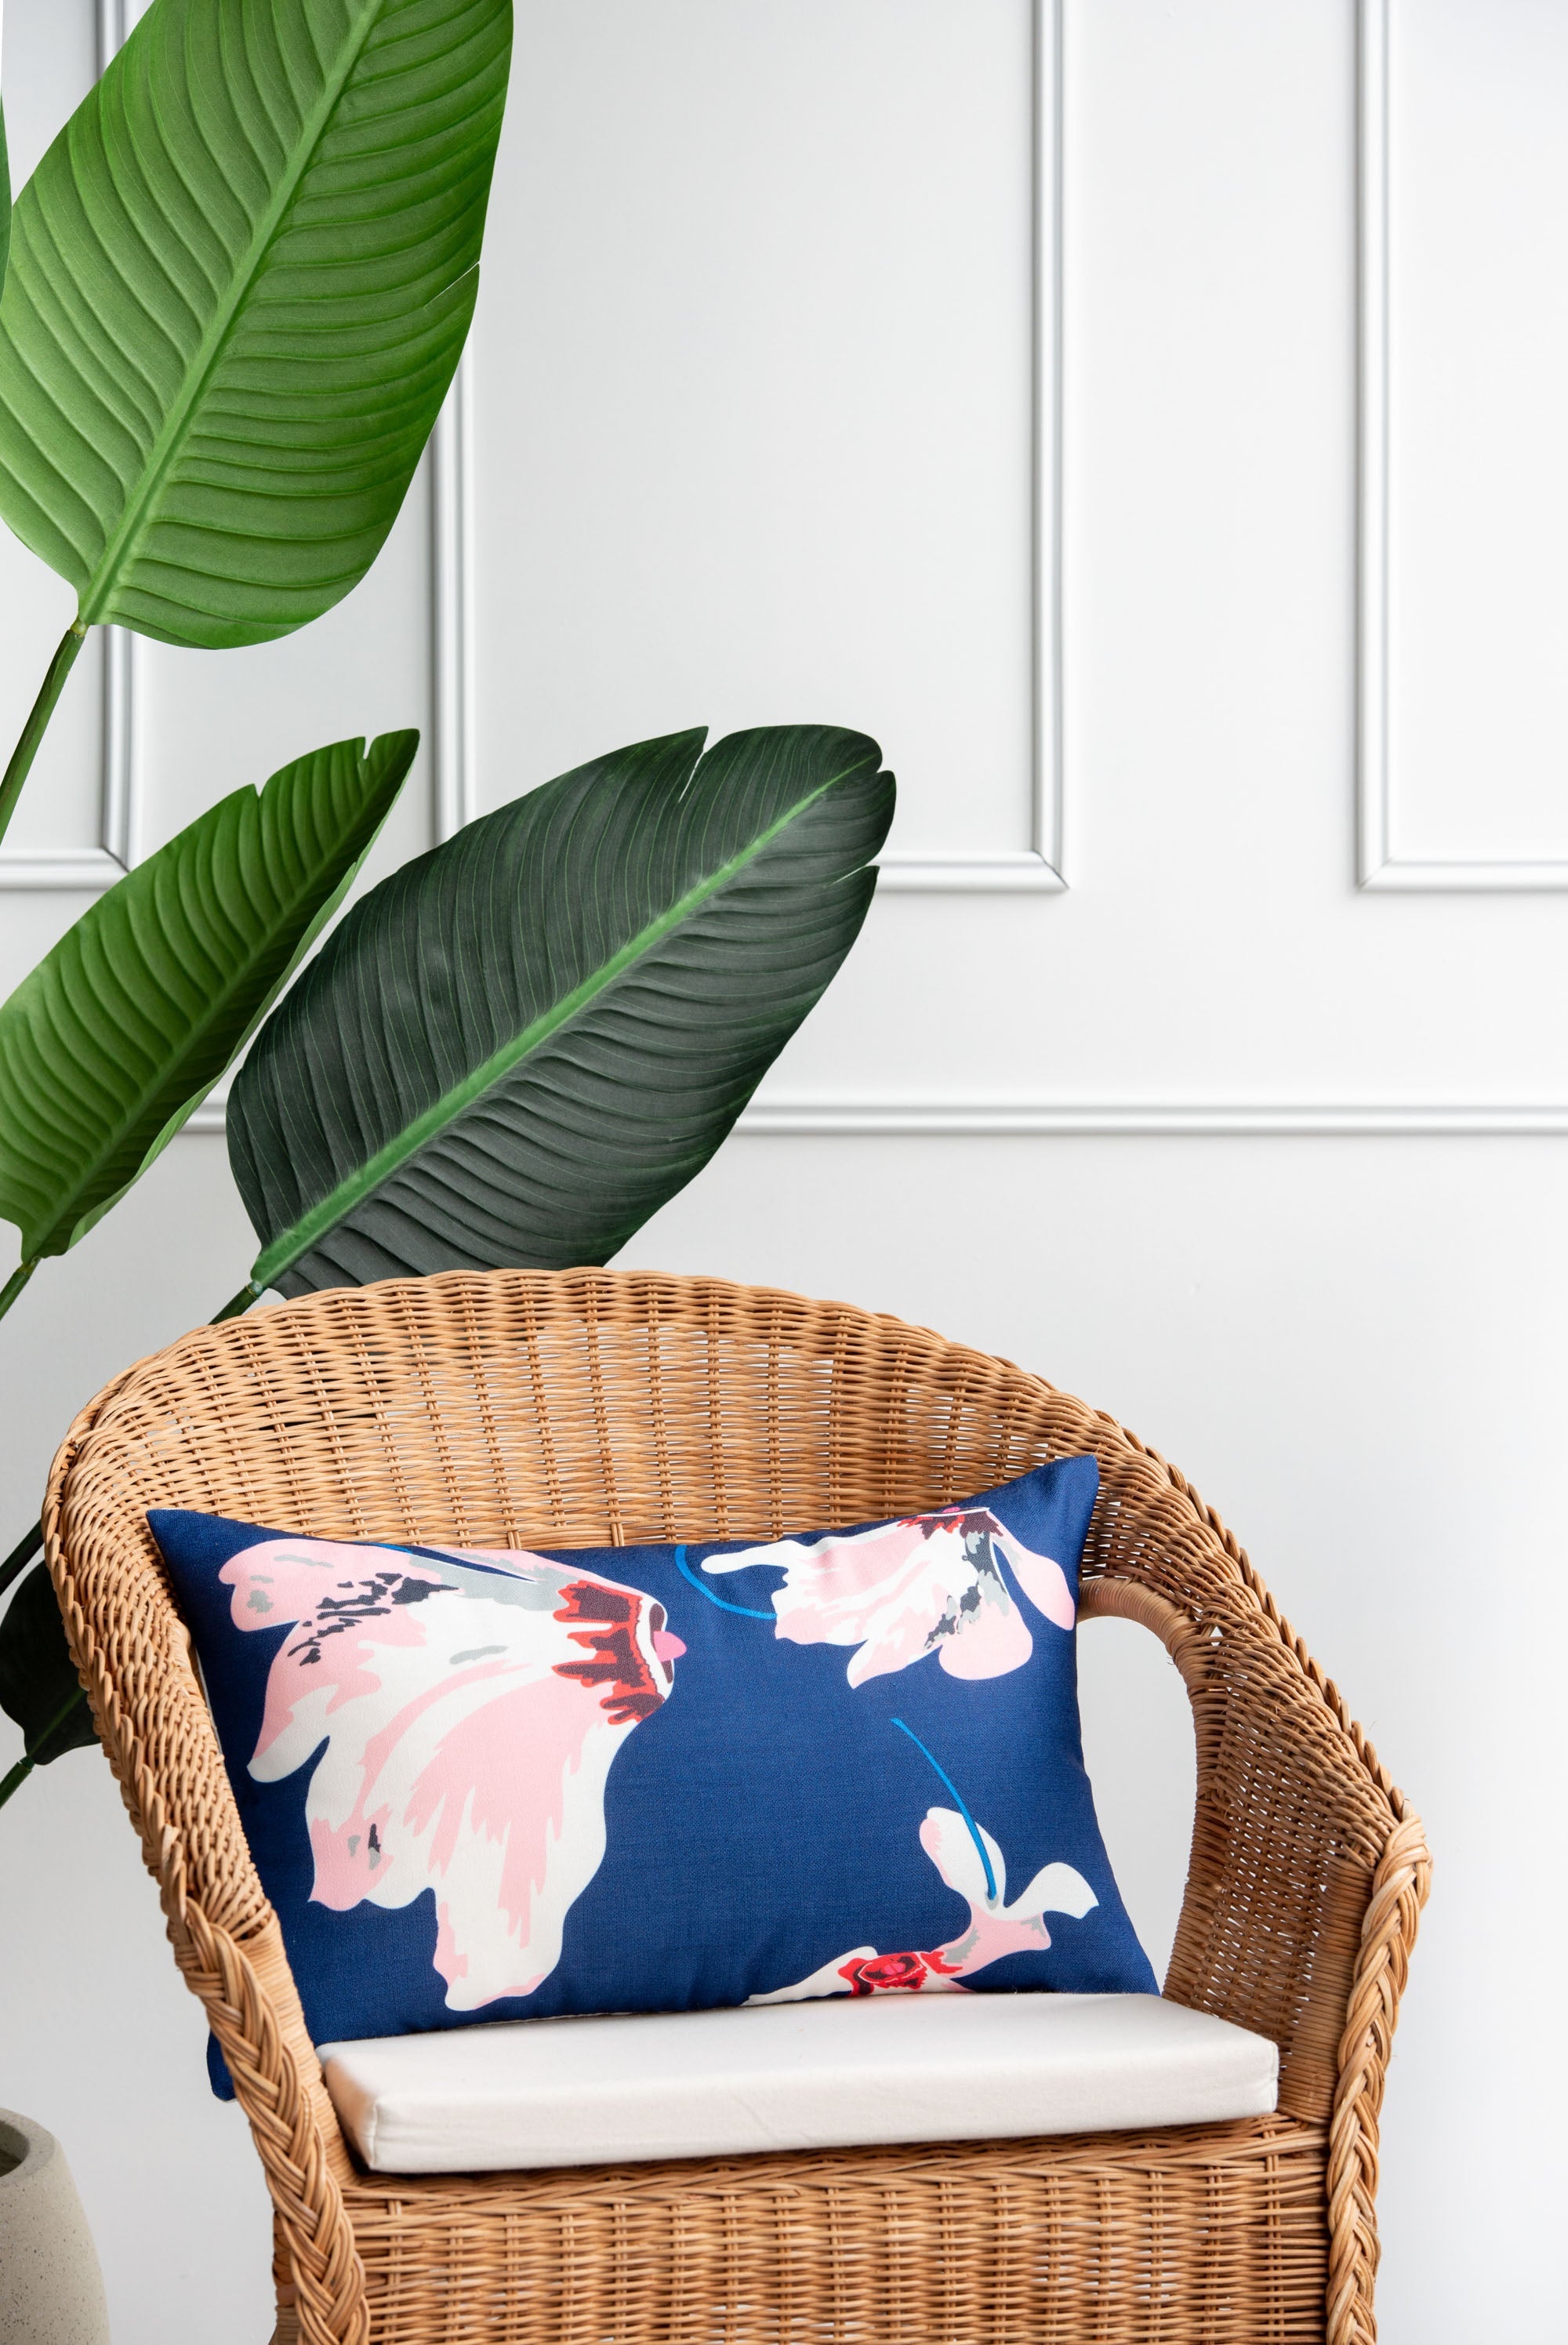 Spring Indoor Outdoor Lumbar Pillow Cover, Floral, Navy Blue Pink, 12"x20"-1